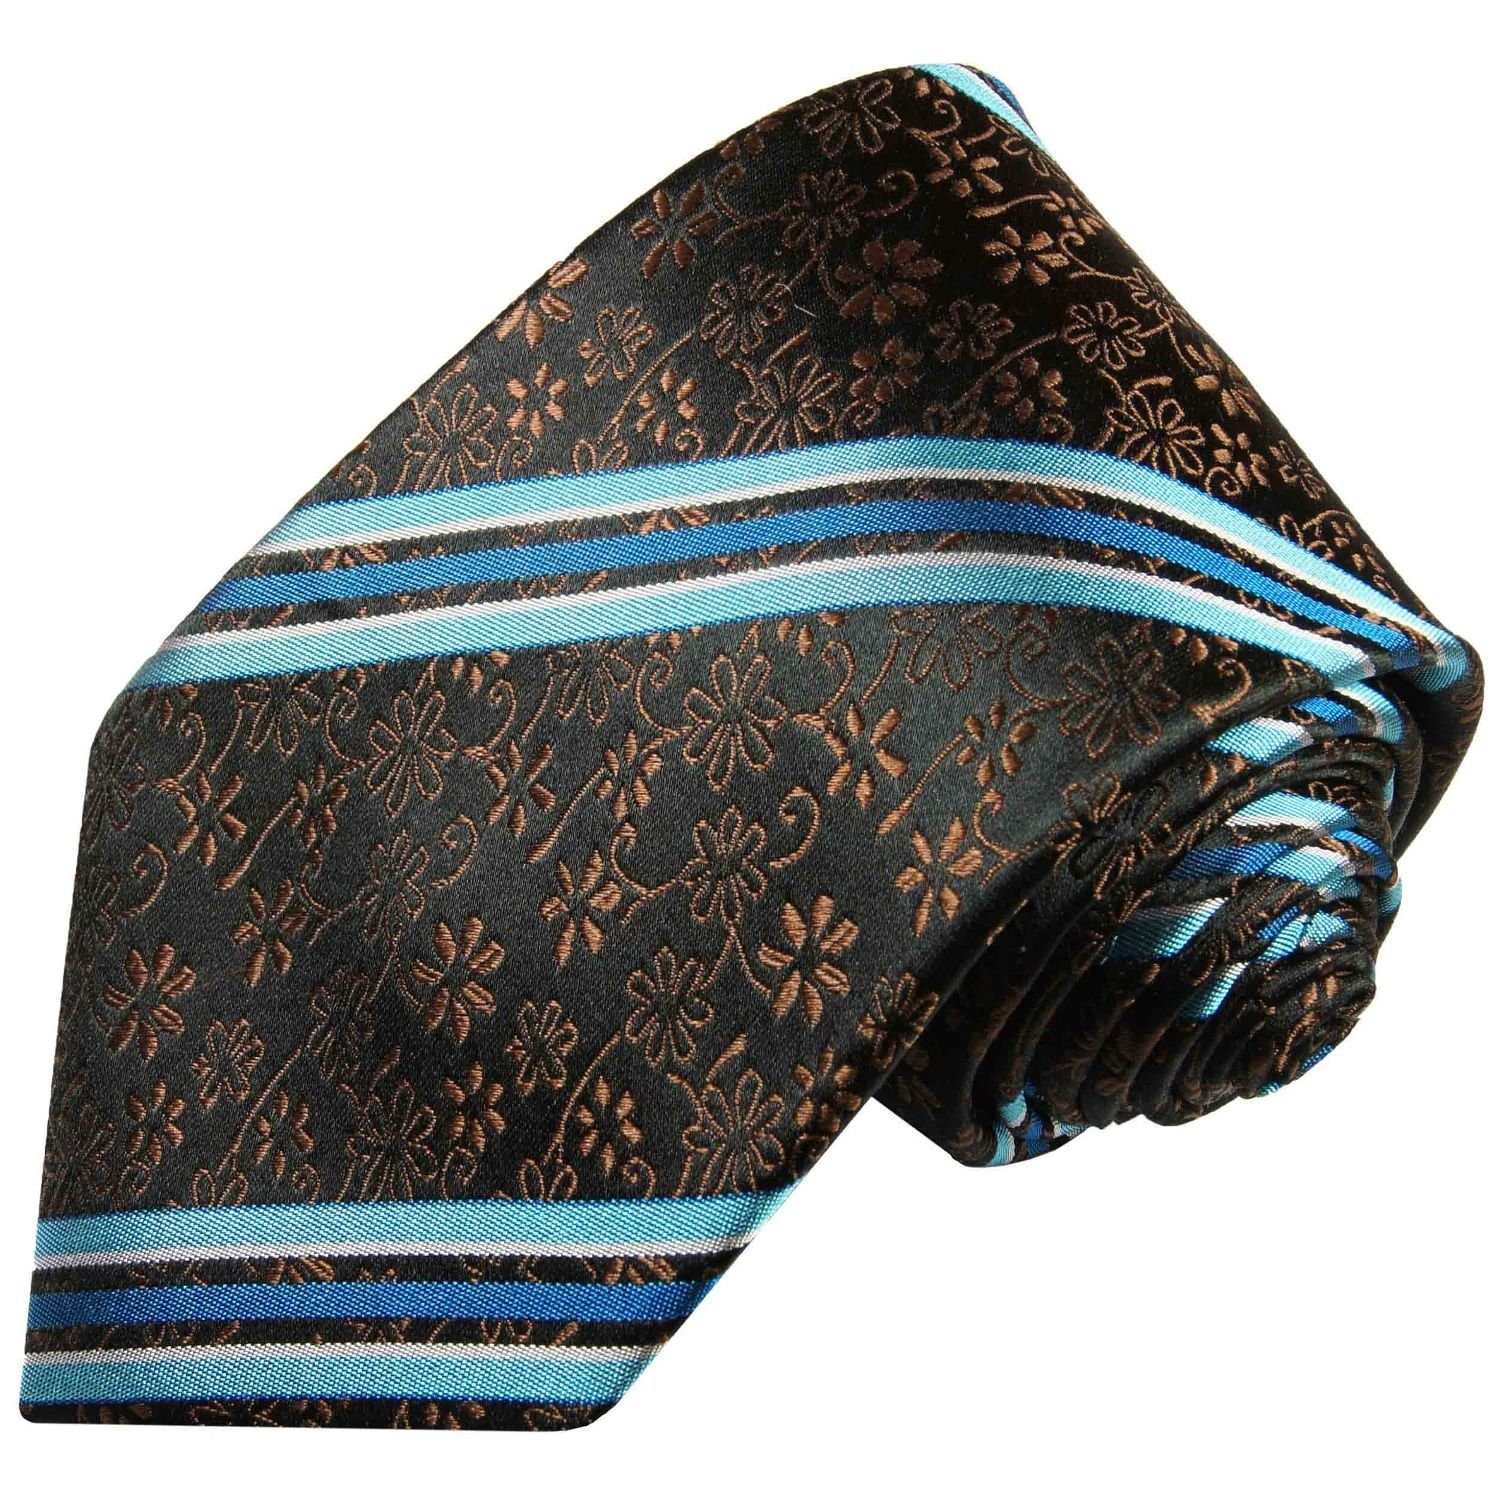 Paul Malone Krawatte Moderne 100% floral braun Herren Seide (6cm), gestreift türkis 394 Schmal Seidenkrawatte